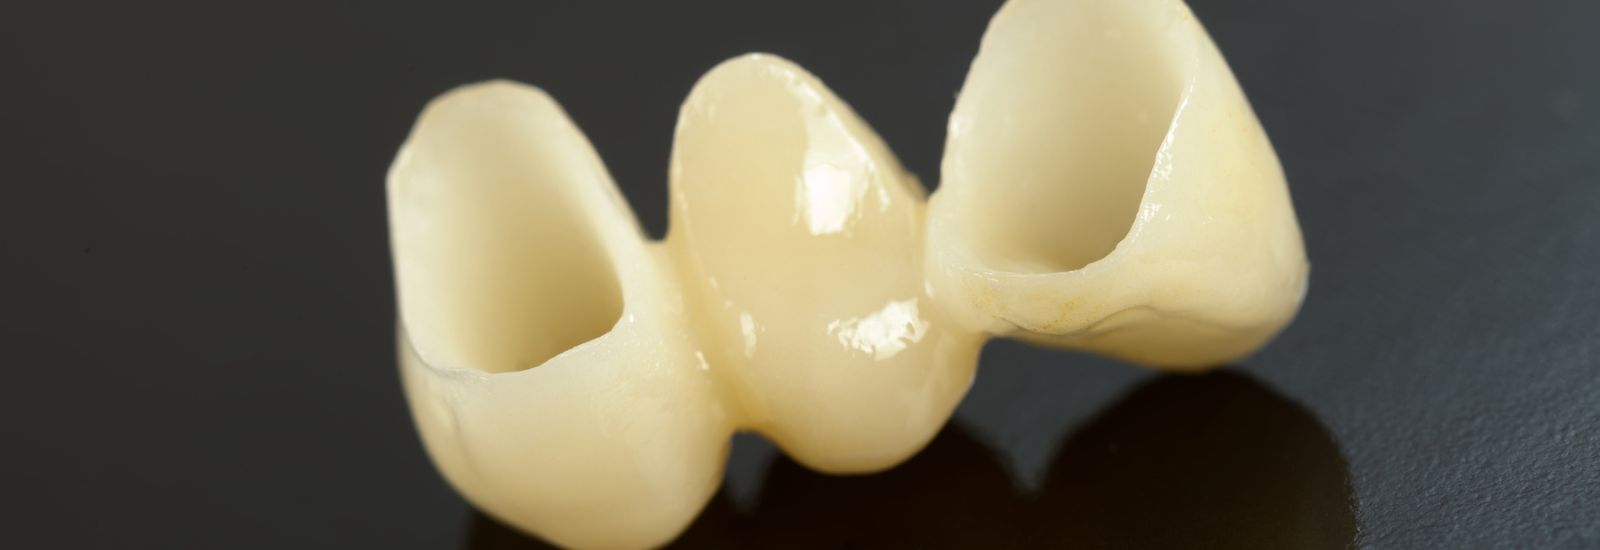 Pressed ceramic teeth - Dental bridge model